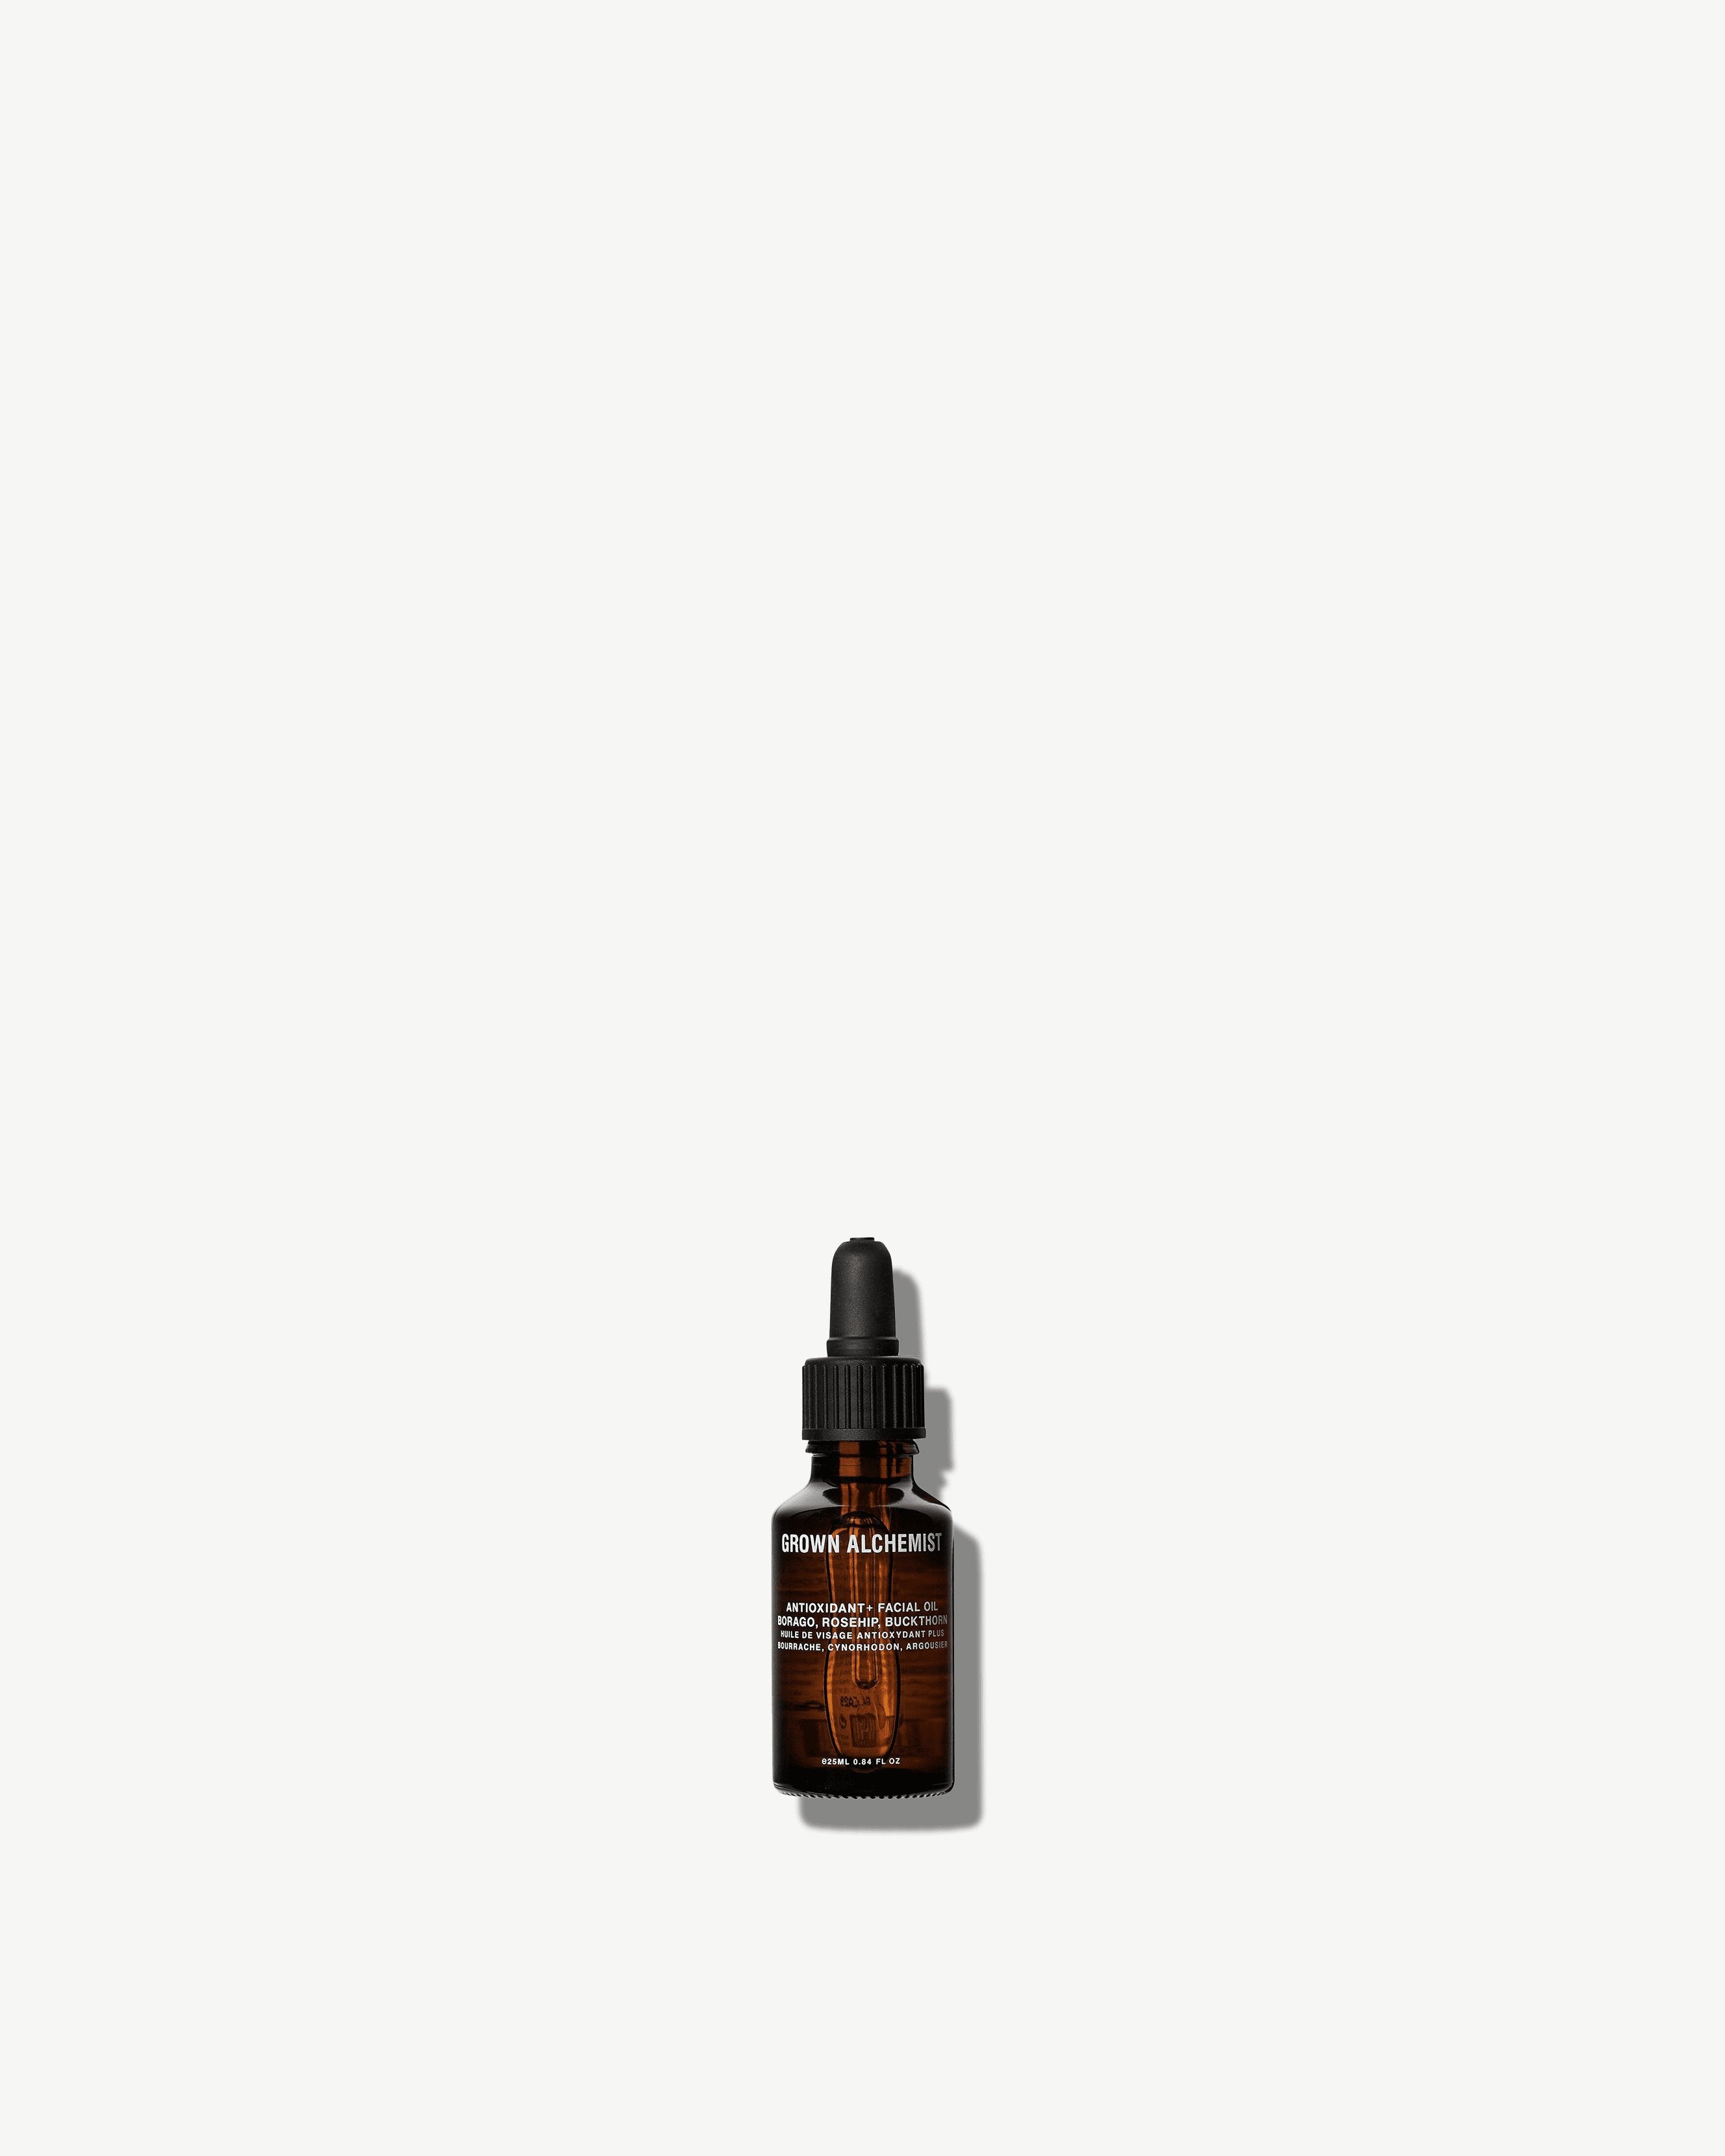 Grown Alchemist Antioxidant + Facial Credo Oil Natural Moisturizer Oil Clean, - –